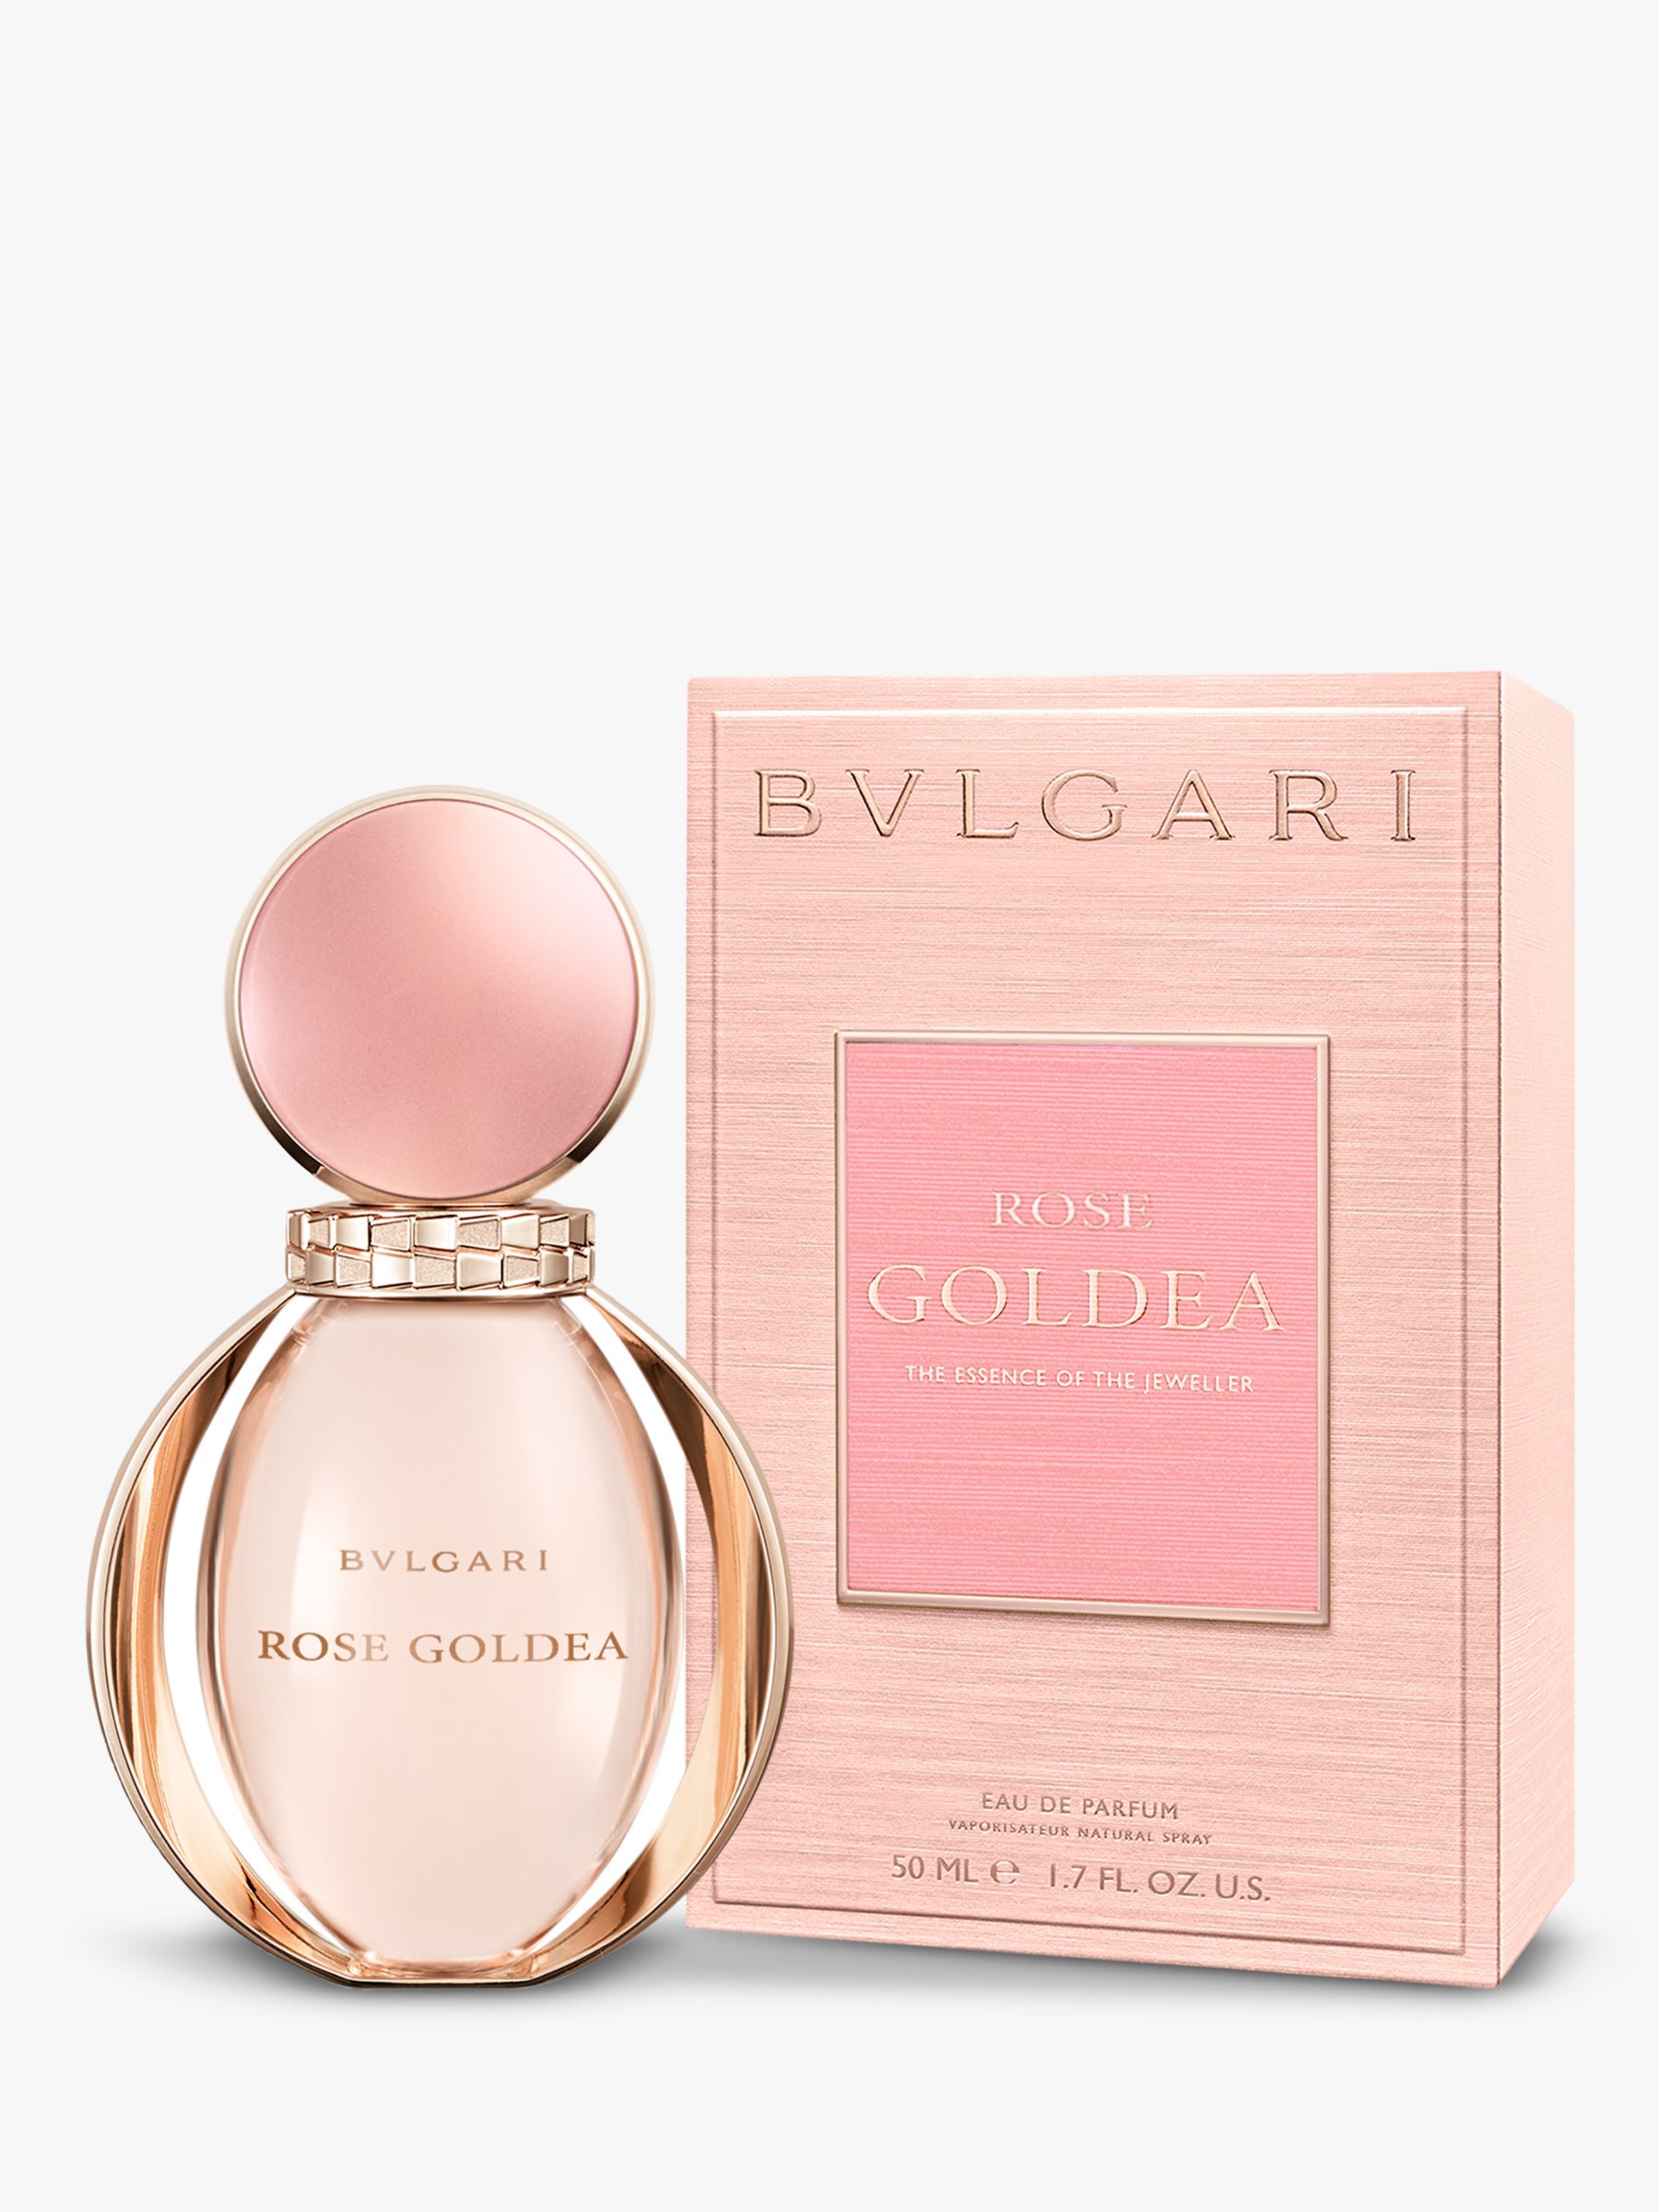 BVLGARI Rose Goldea Eau de Parfum, 25ml at John Lewis & Partners